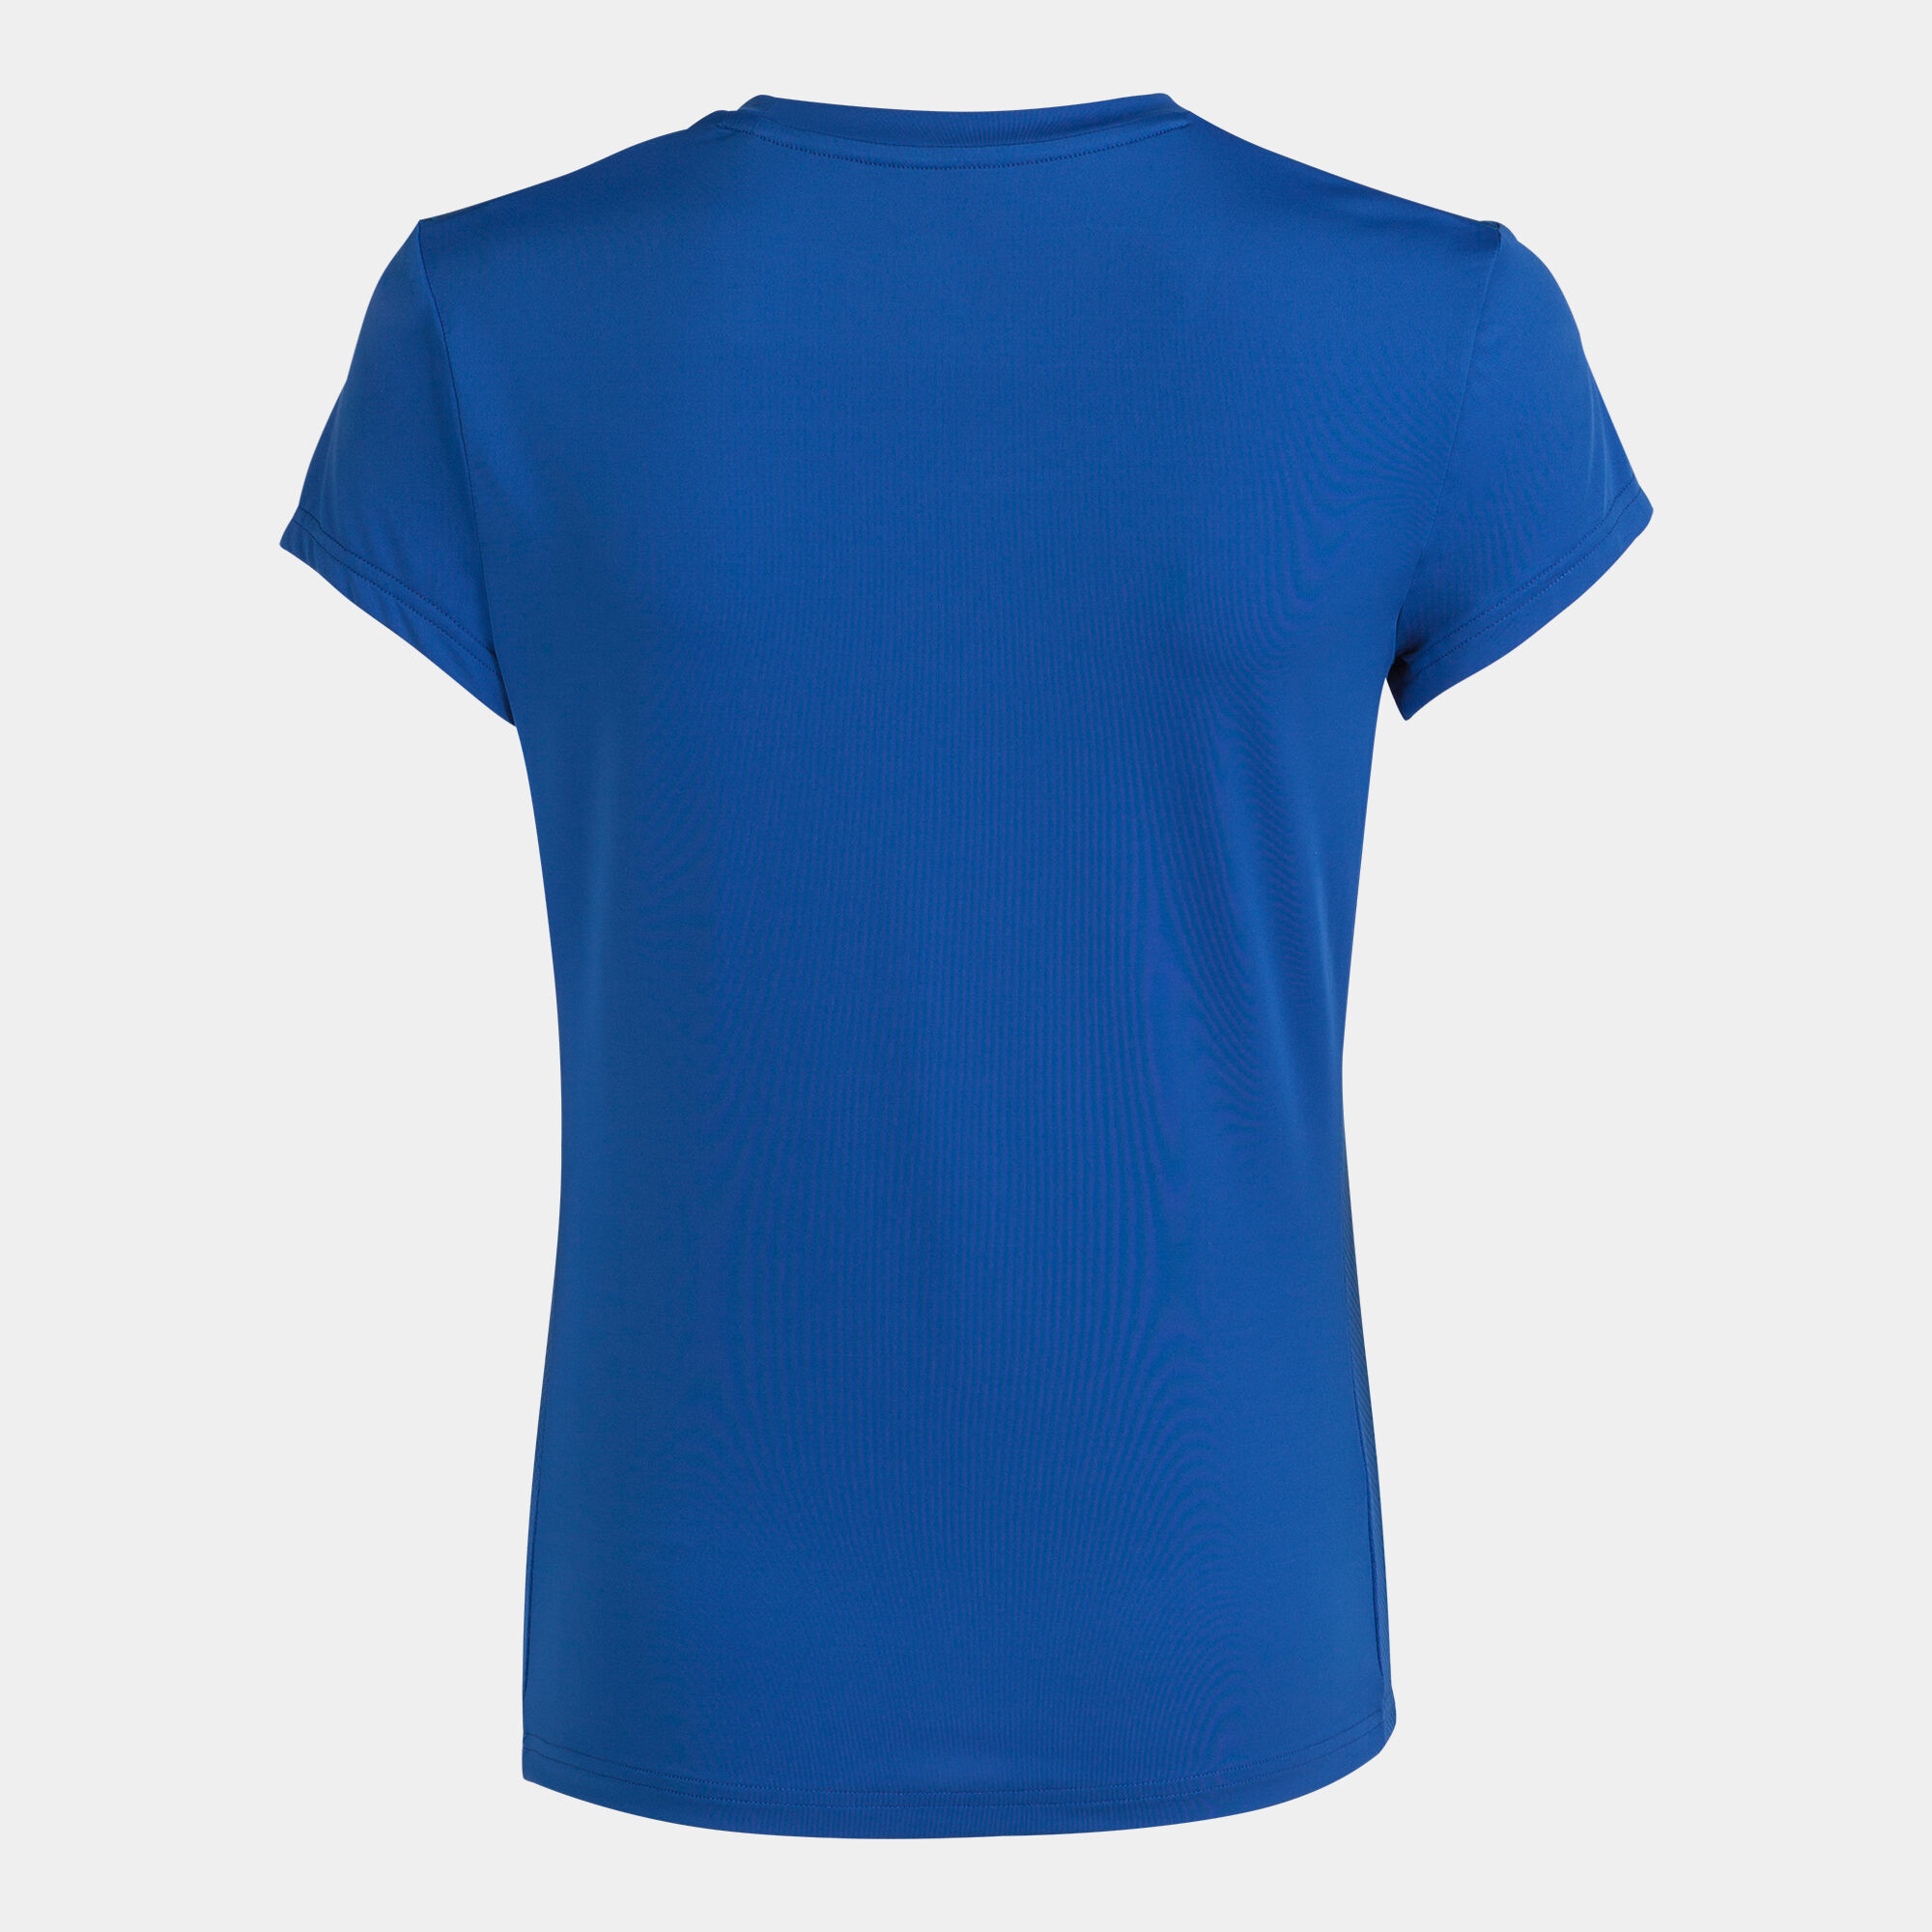 Shirt short sleeve woman Elite VIII royal blue